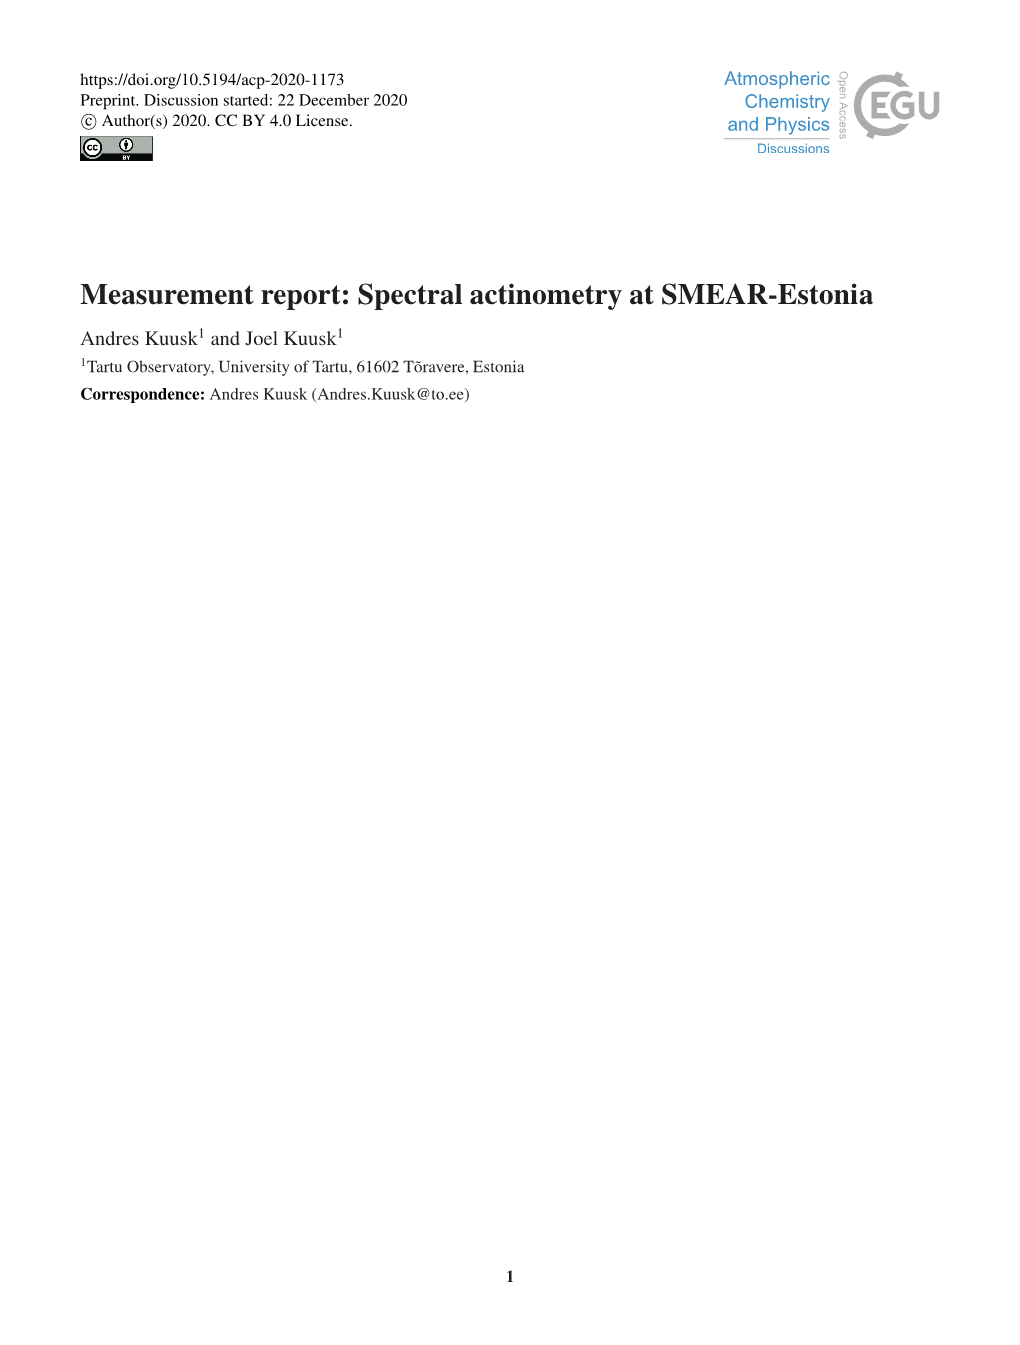 Spectral Actinometry at SMEAR-Estonia